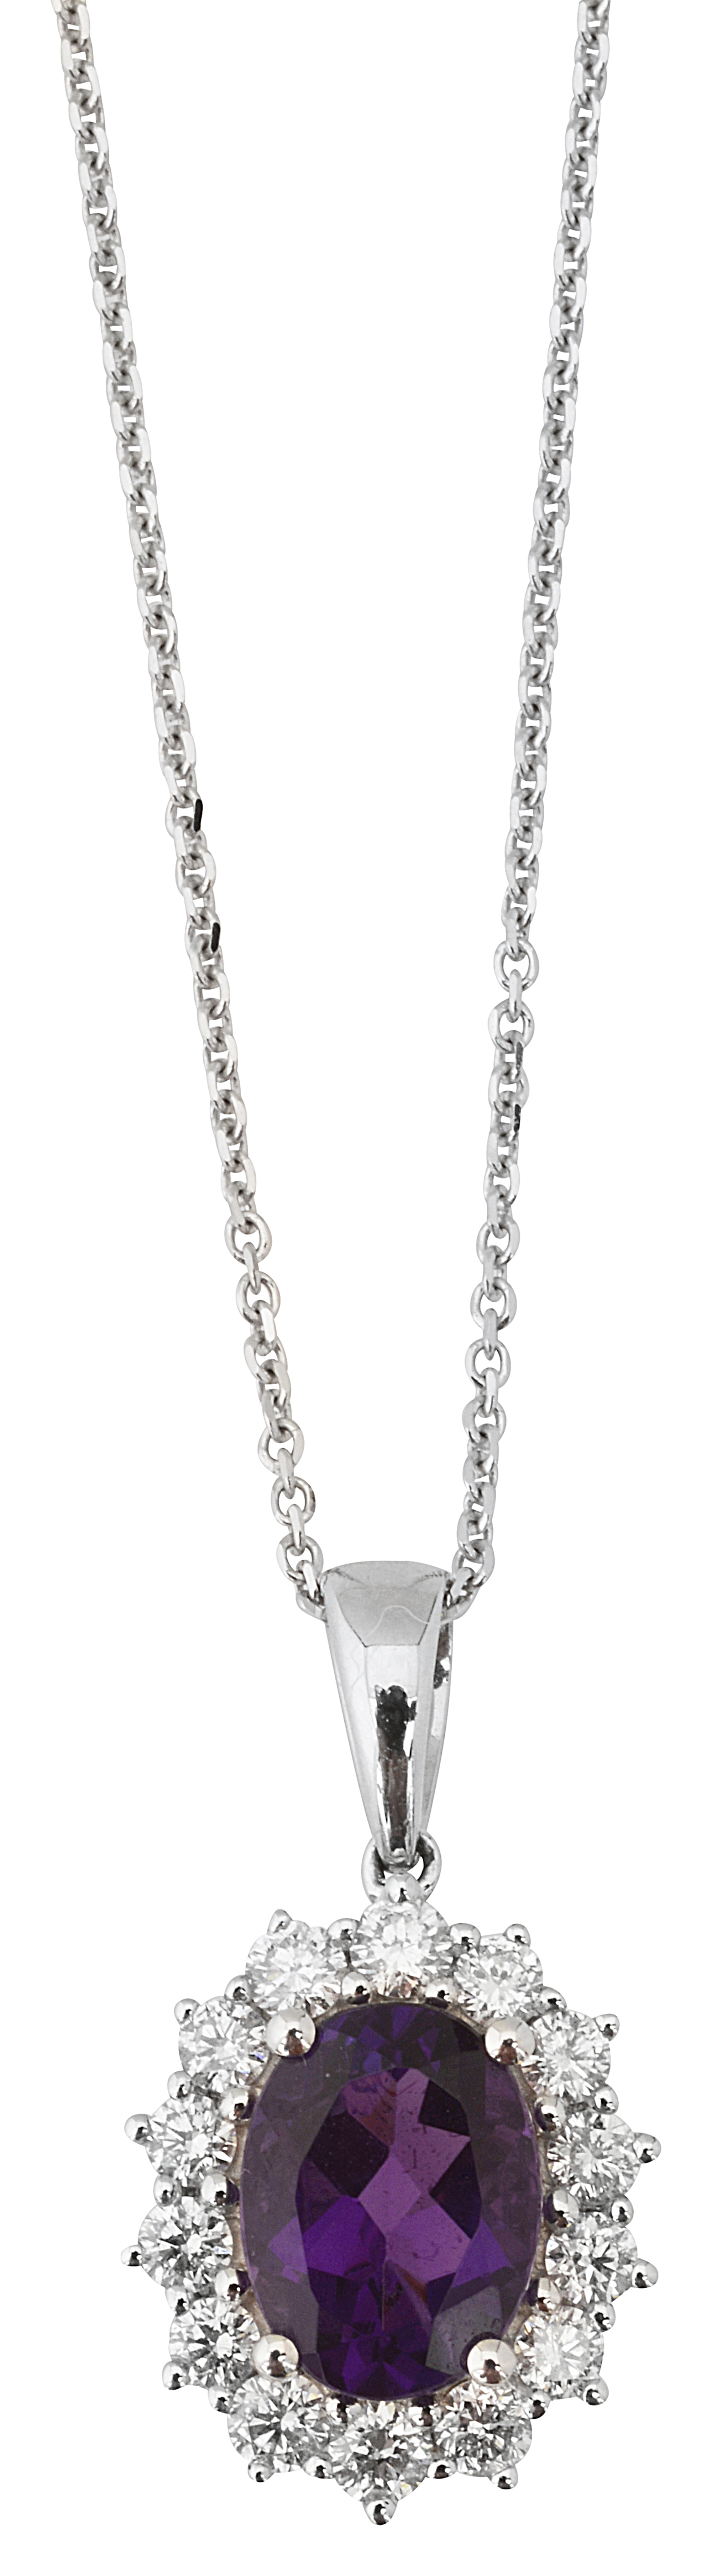 An amethyst and diamond-set cluster pendant